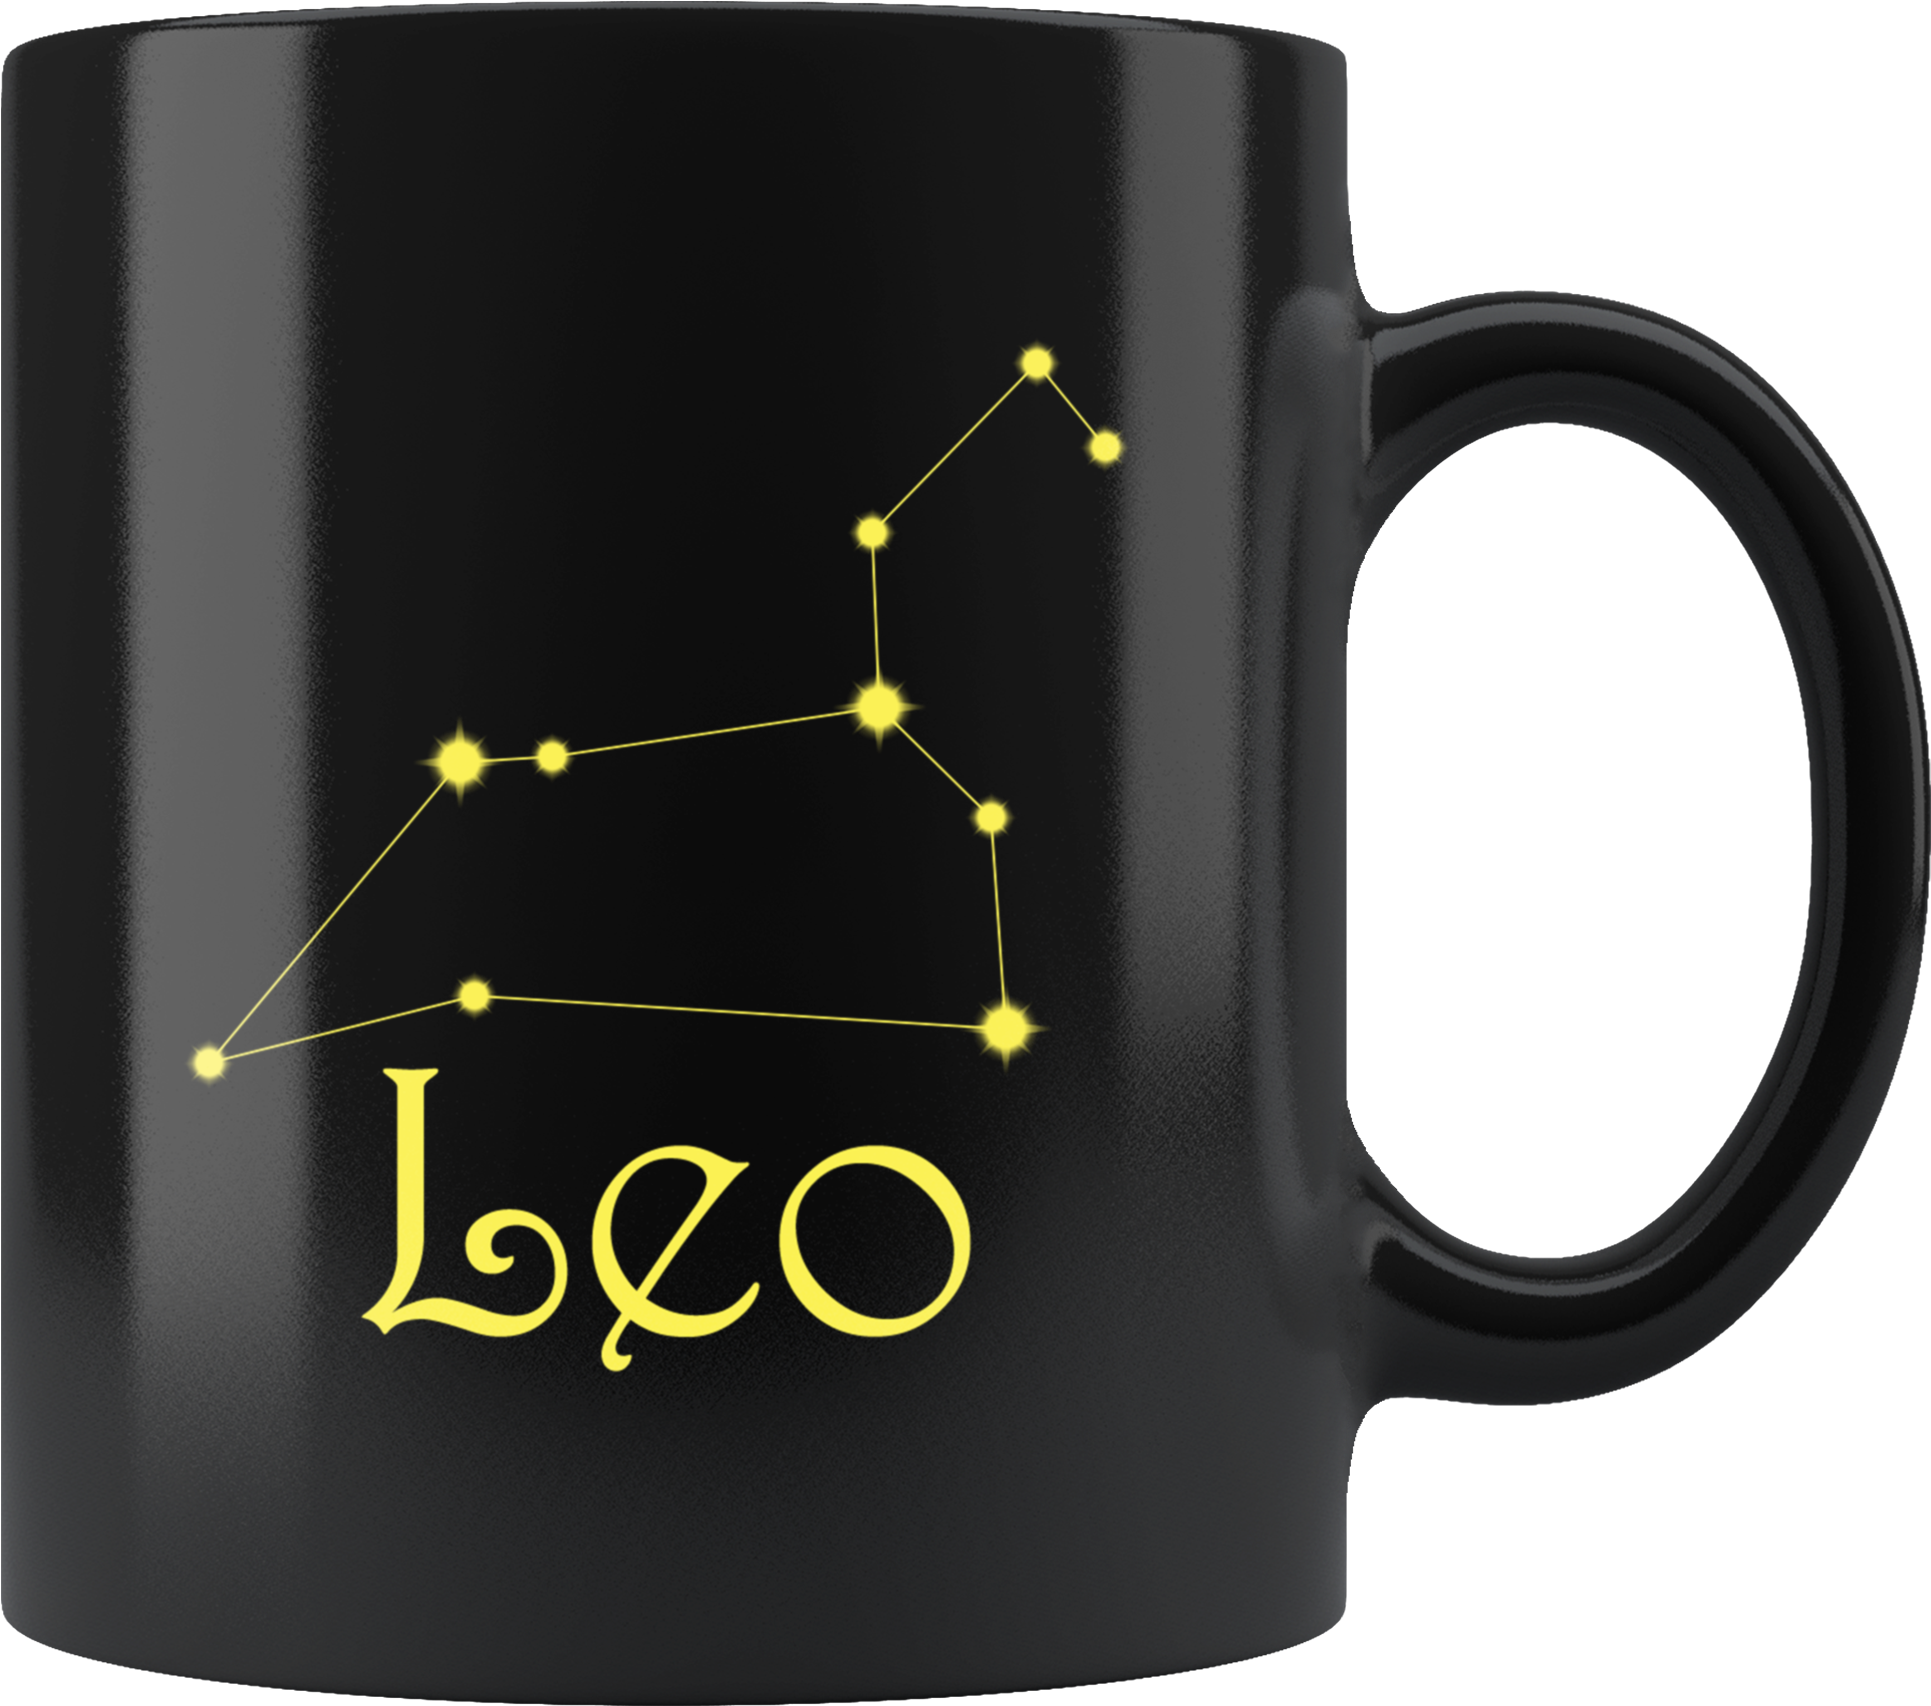 A Black Mug With A Constellation On It